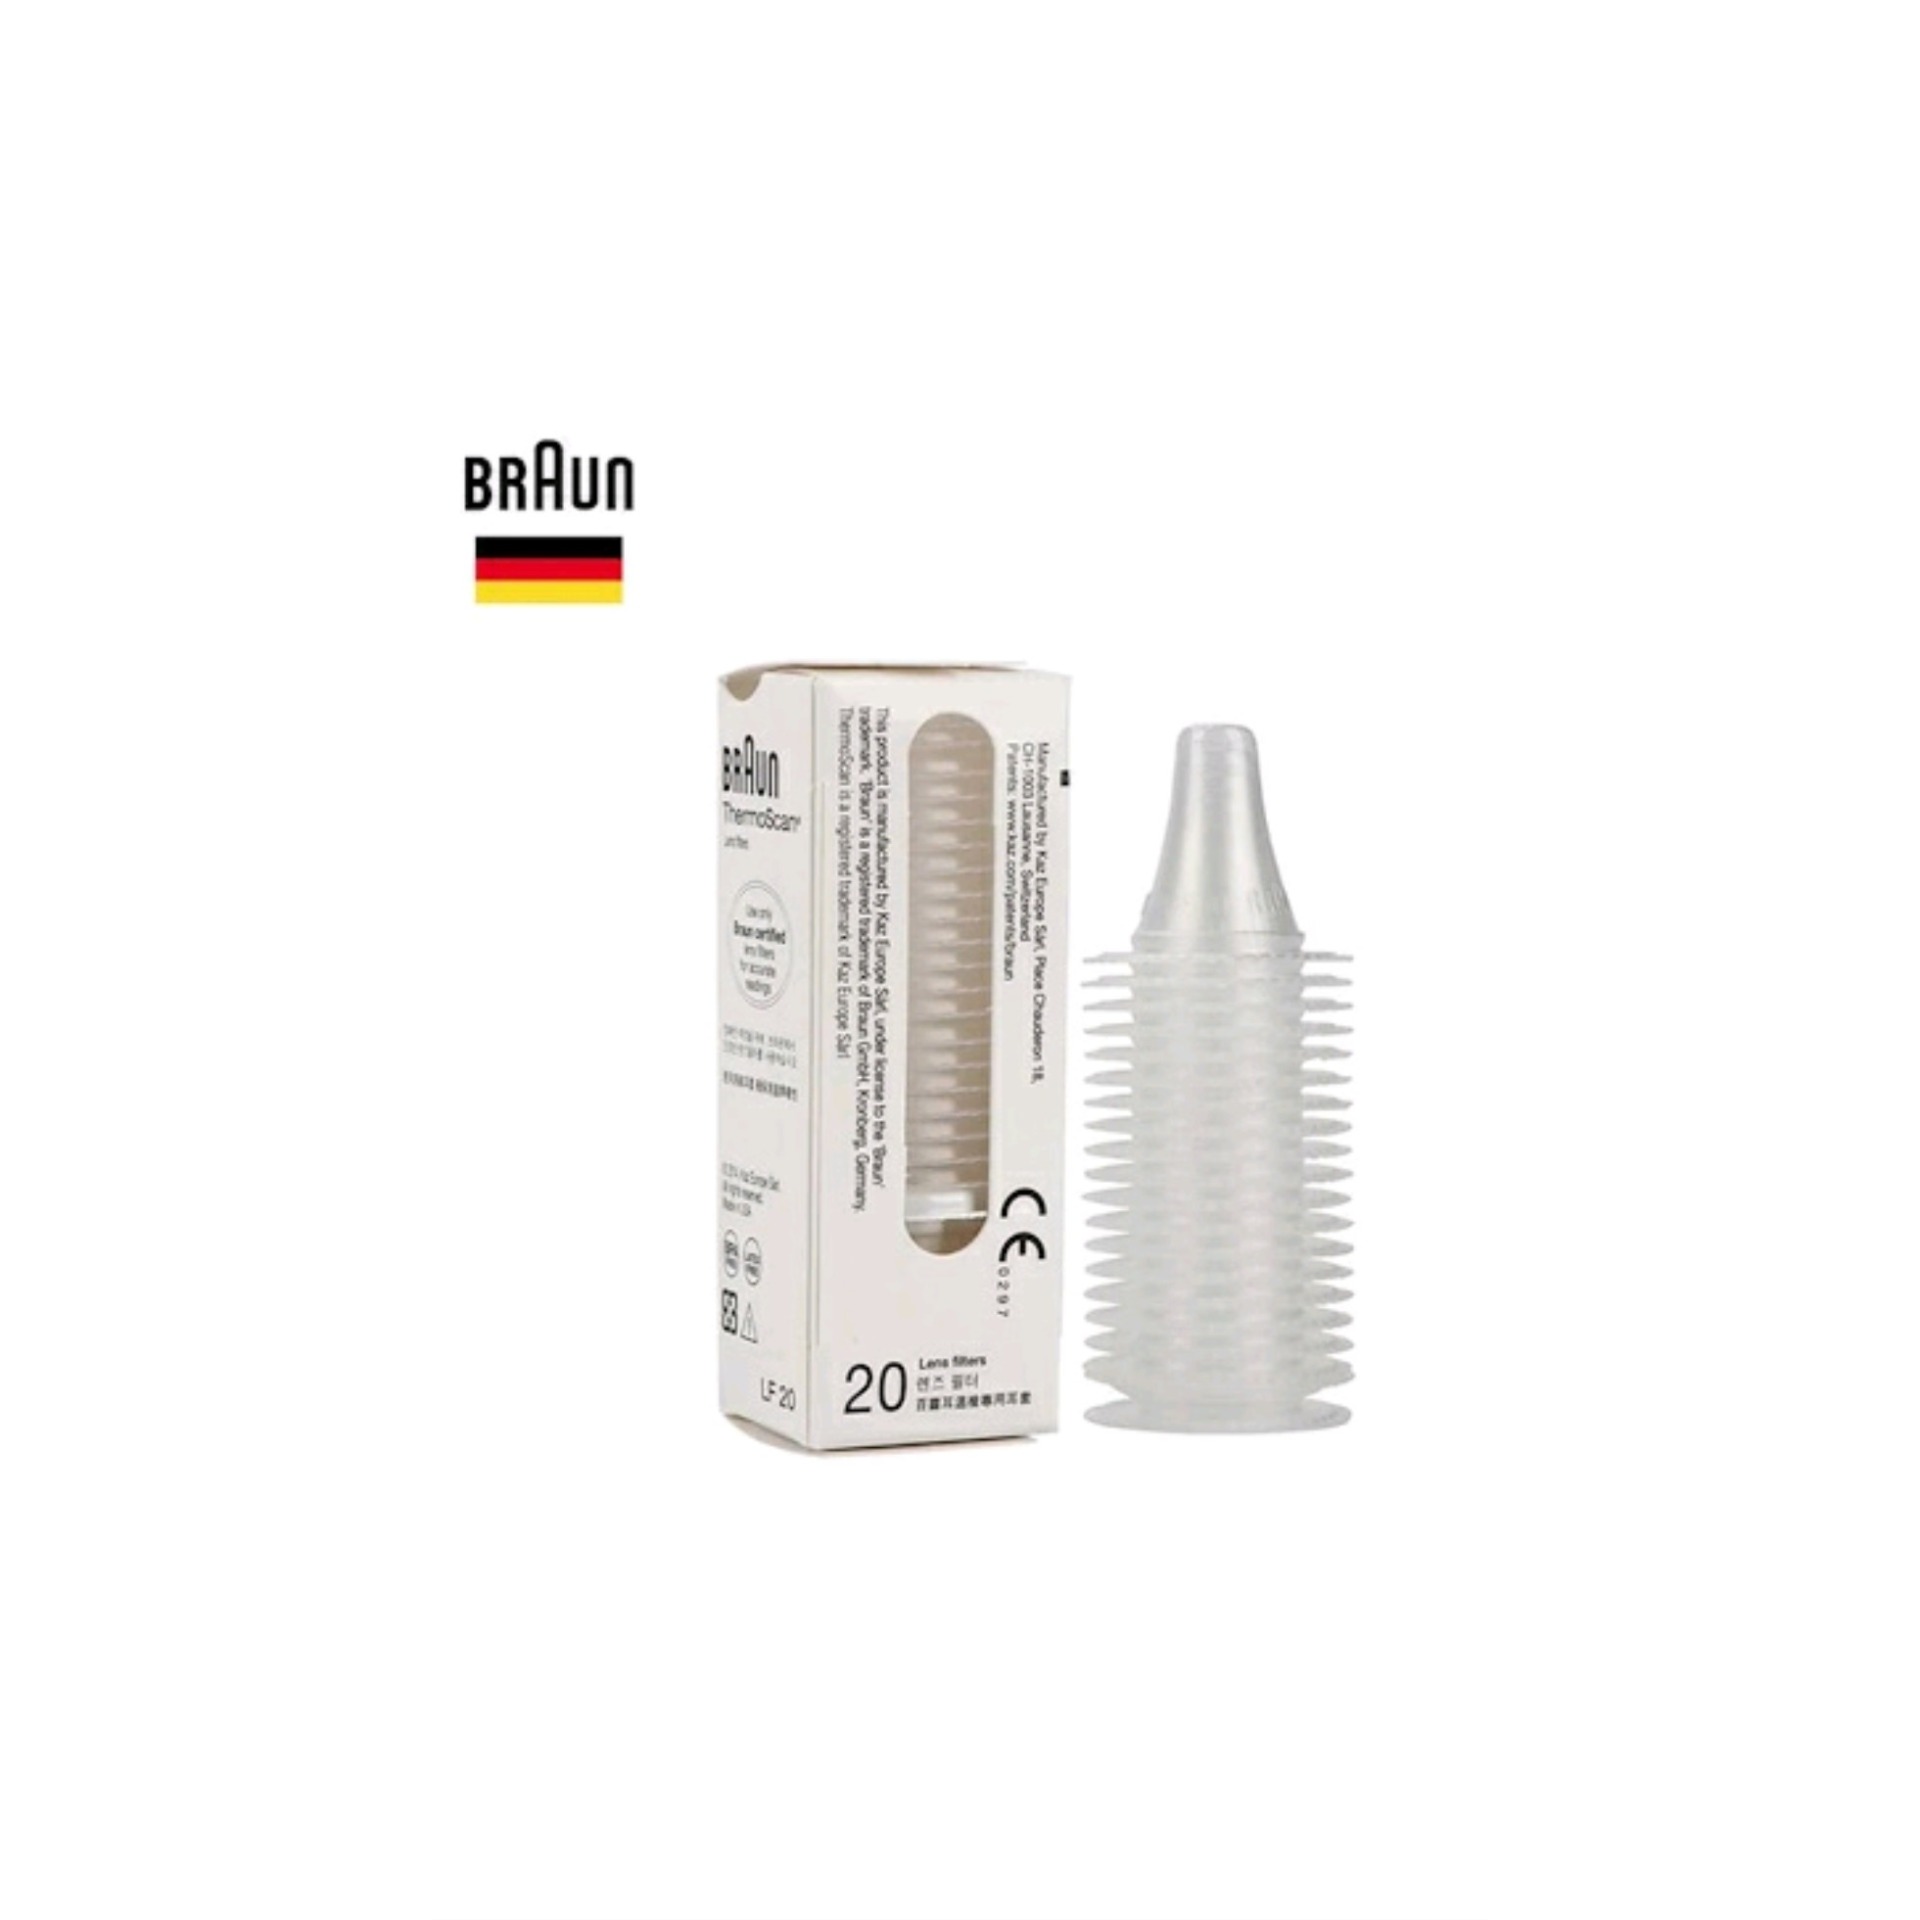 Premier Beringstraat Certificaat Local Seller] 20pcs Genuine Braun Thermoscan Ear Thermometer Lens Filters  Refill Caps | Lazada Singapore